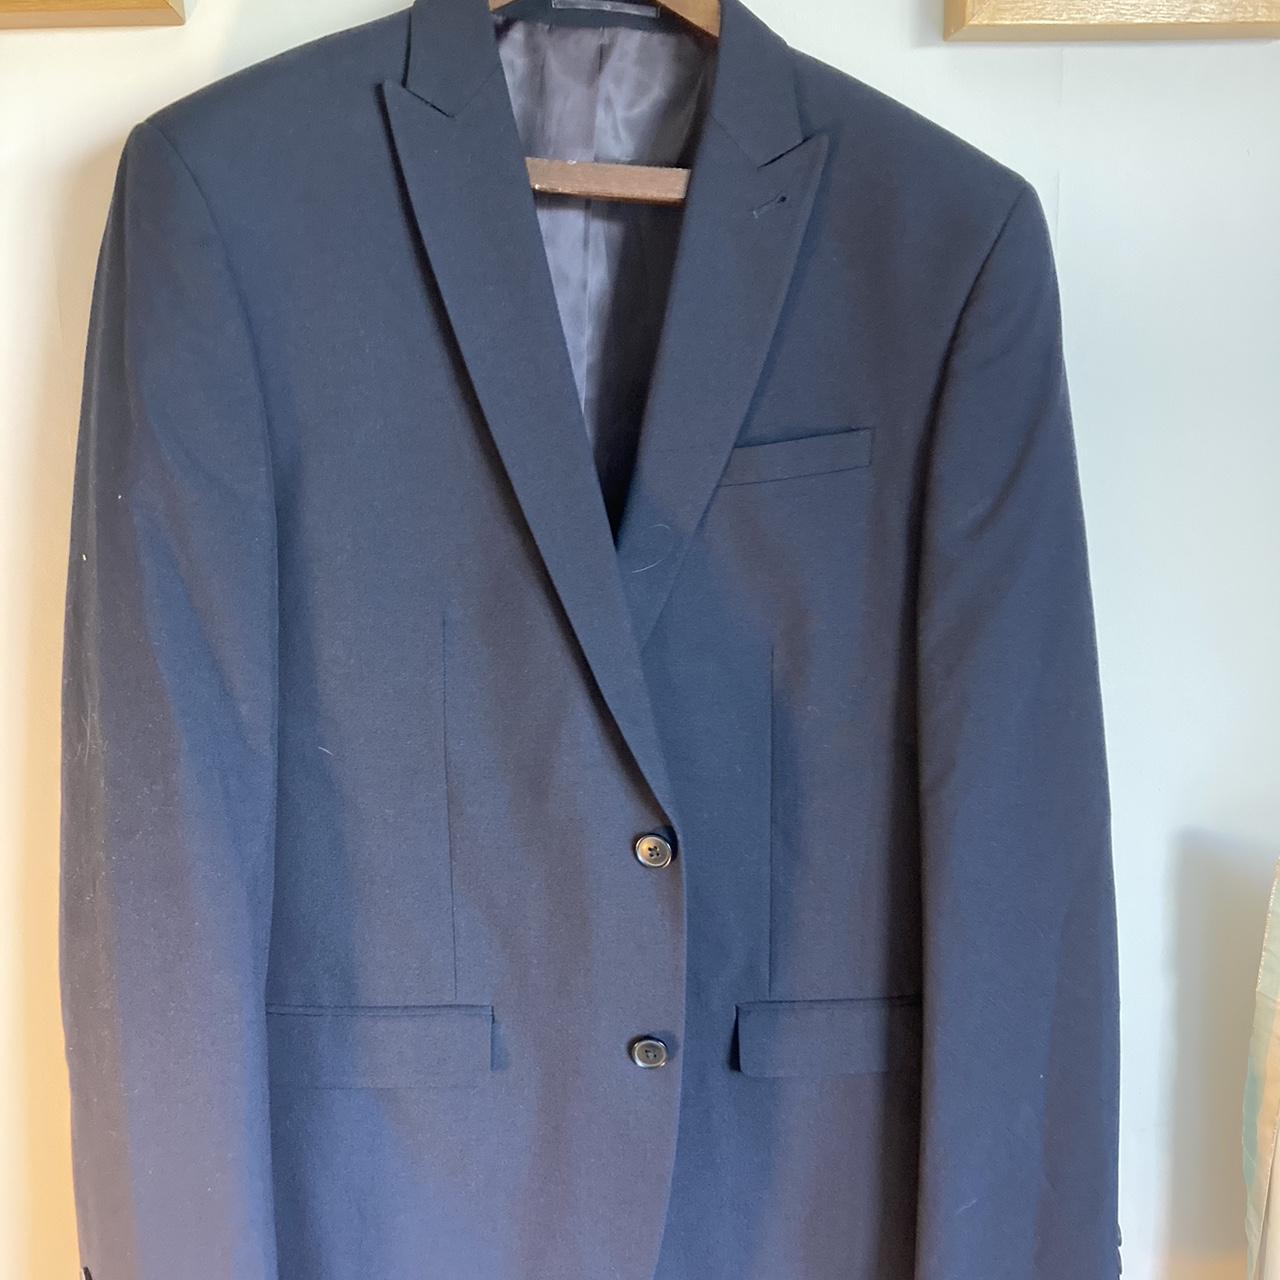 Next suit jacket Navy Great condition 40L - Depop